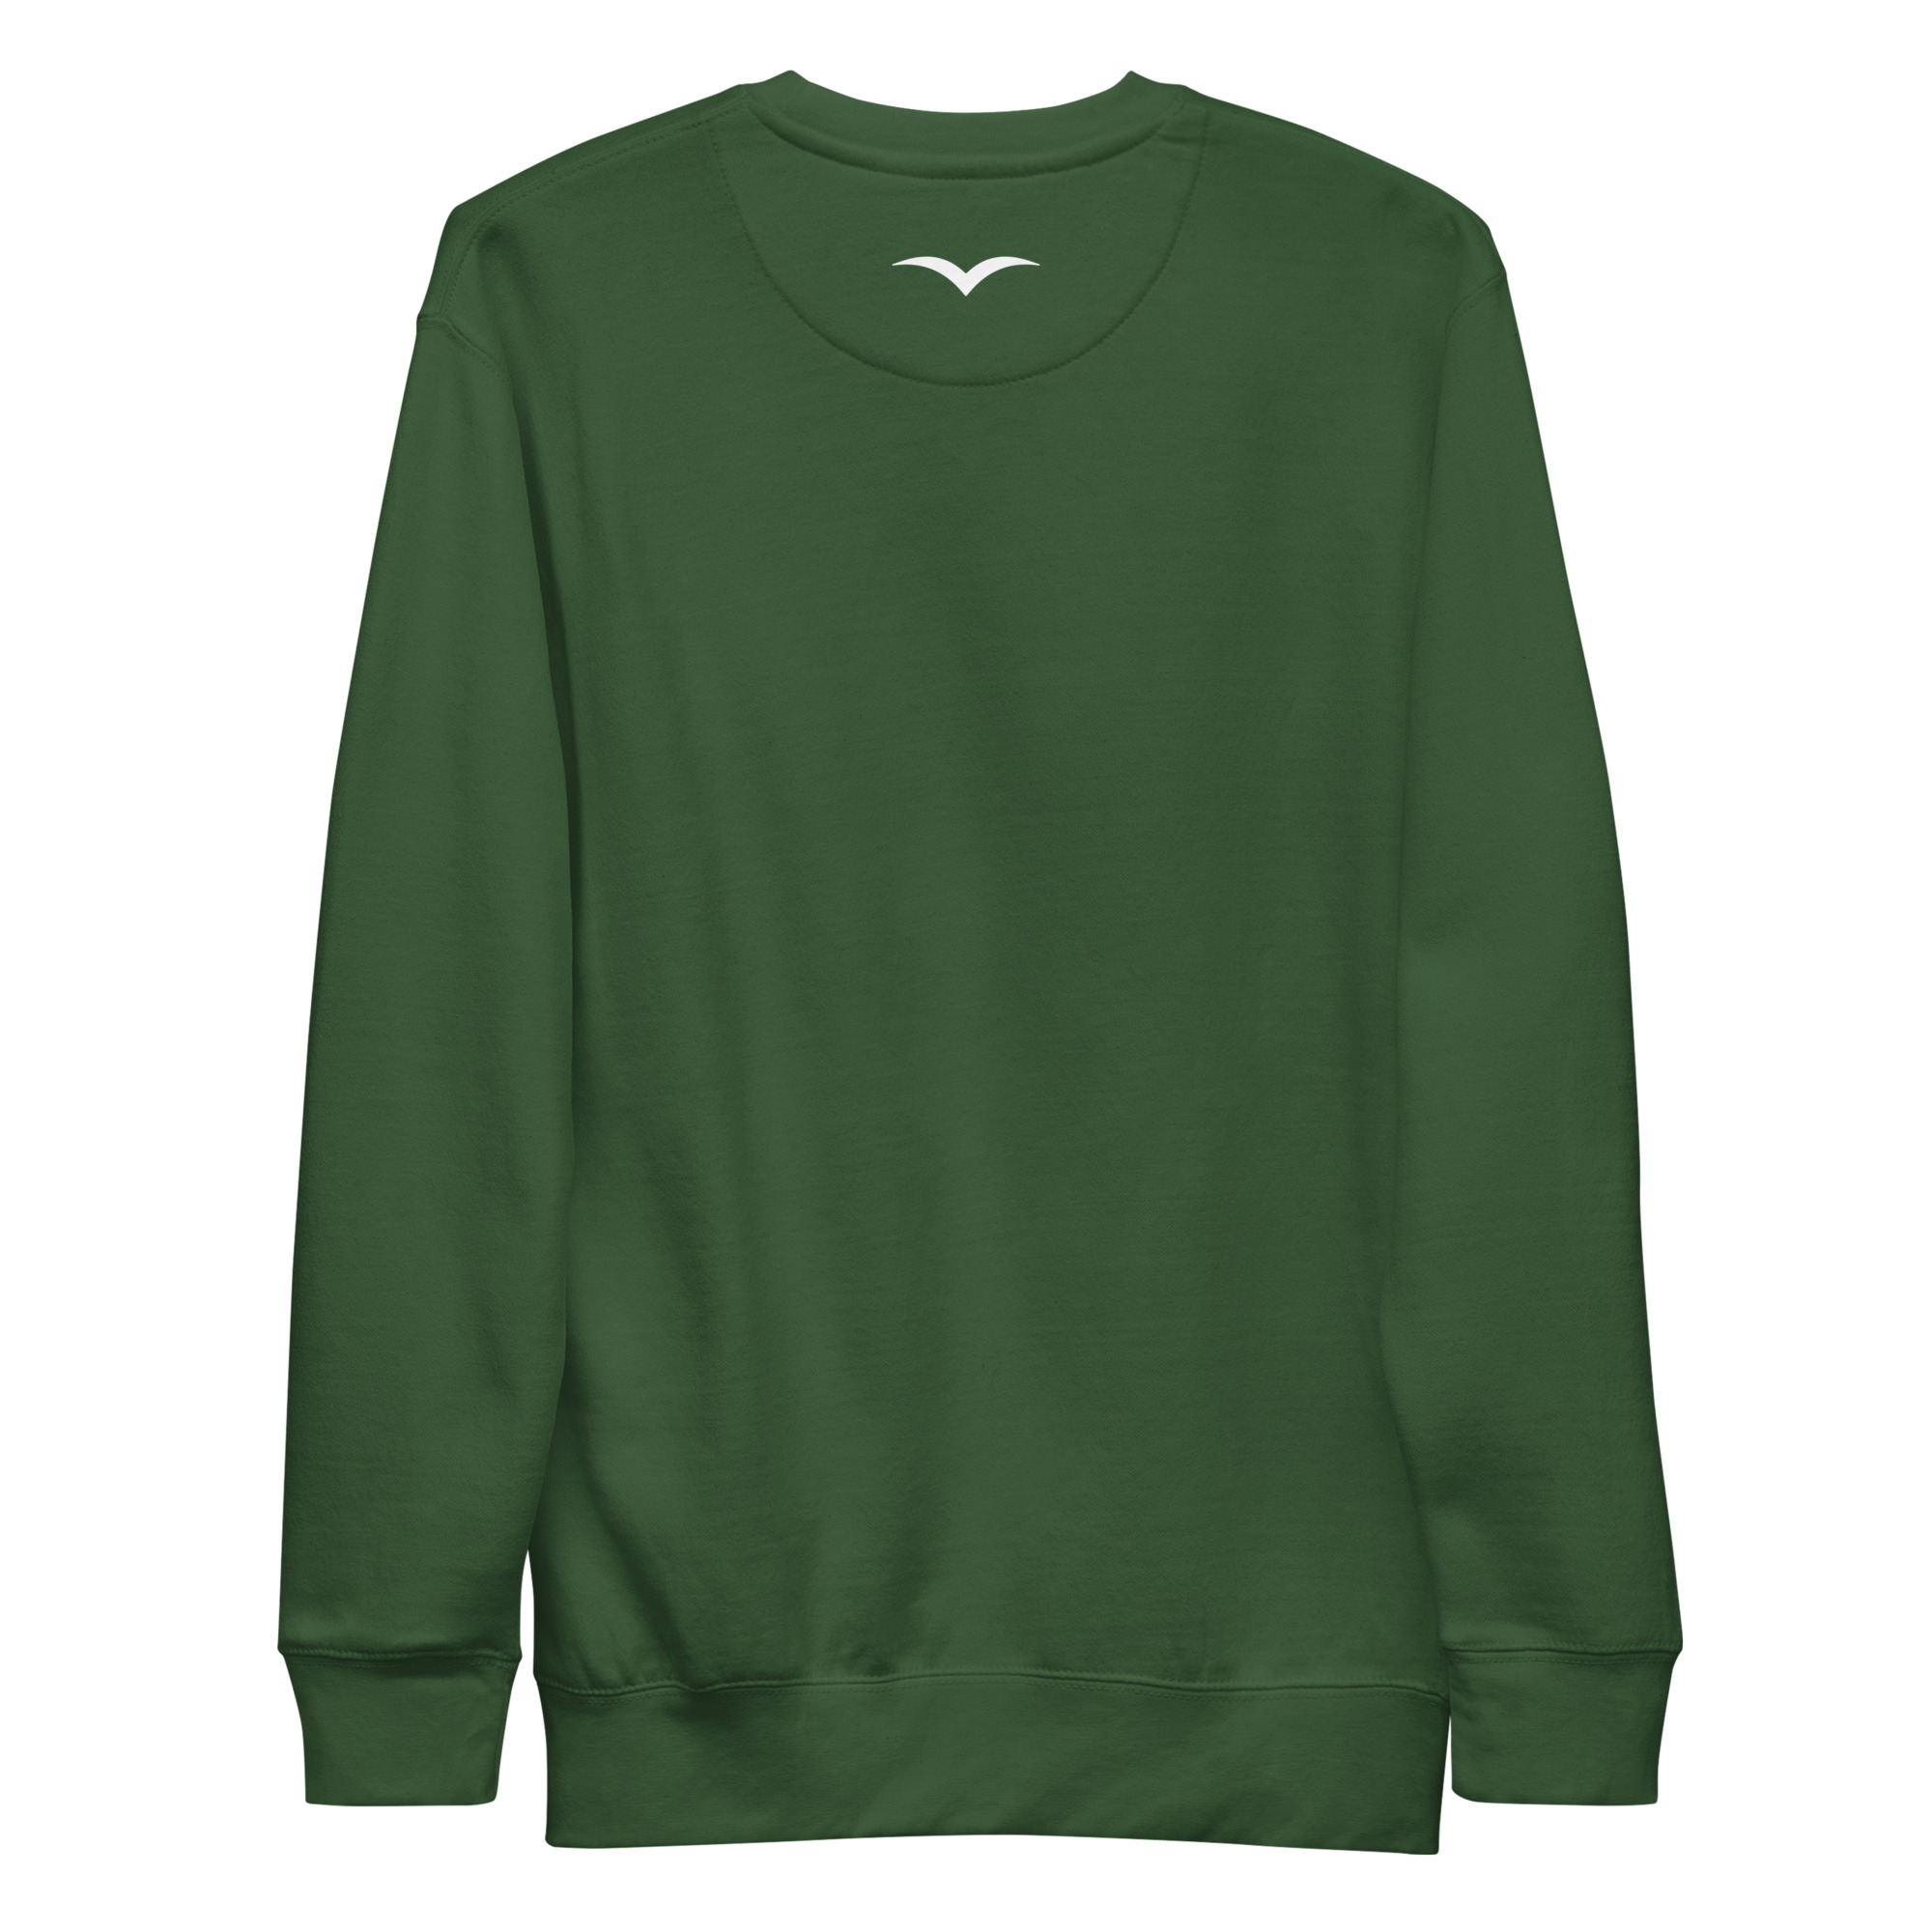 unisex-premium-sweatshirt-forest-green-back-6410f2cc41c75.jpg